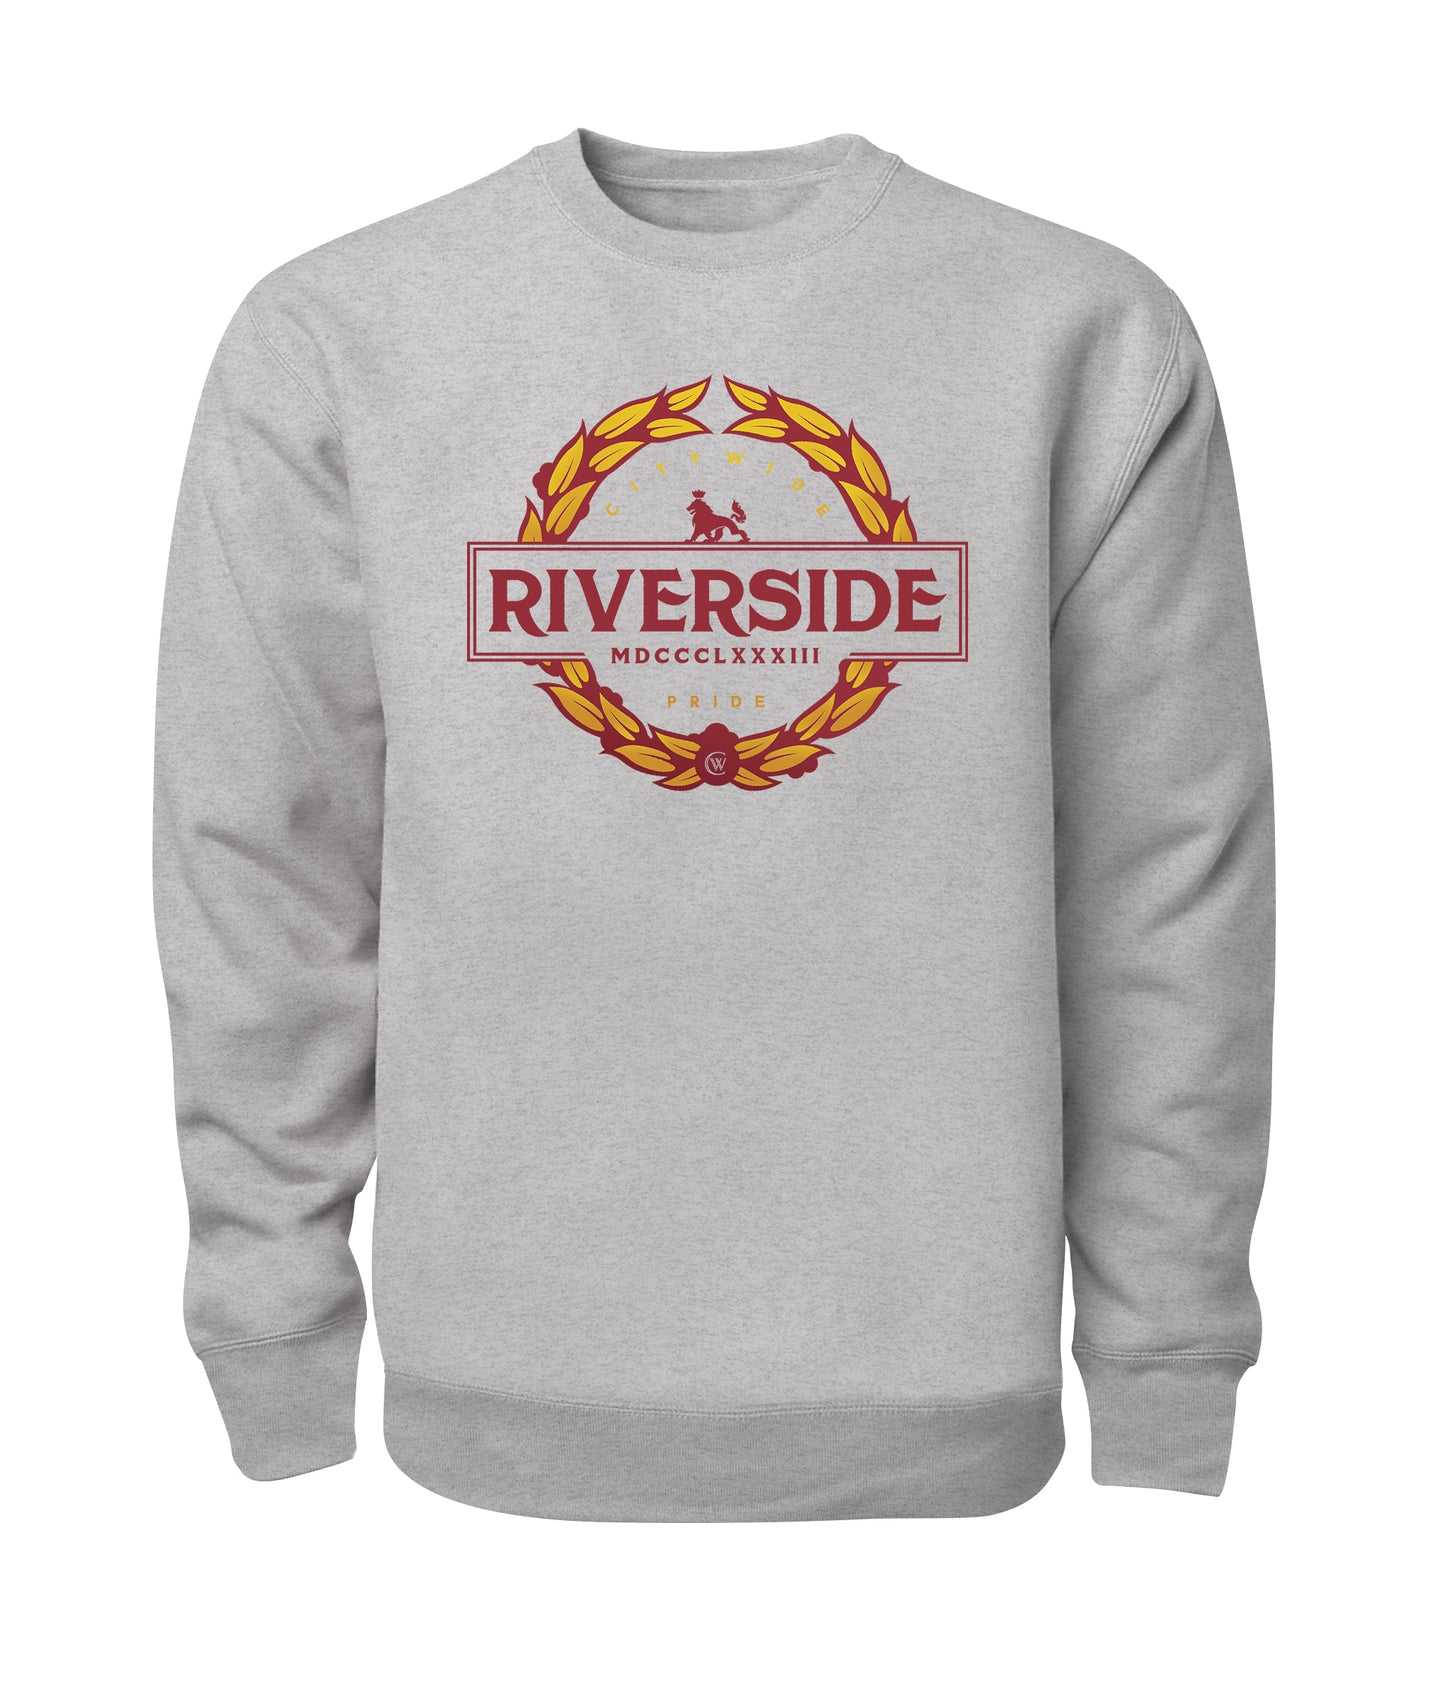 Riverside The Pride Crewneck Sweatshirt